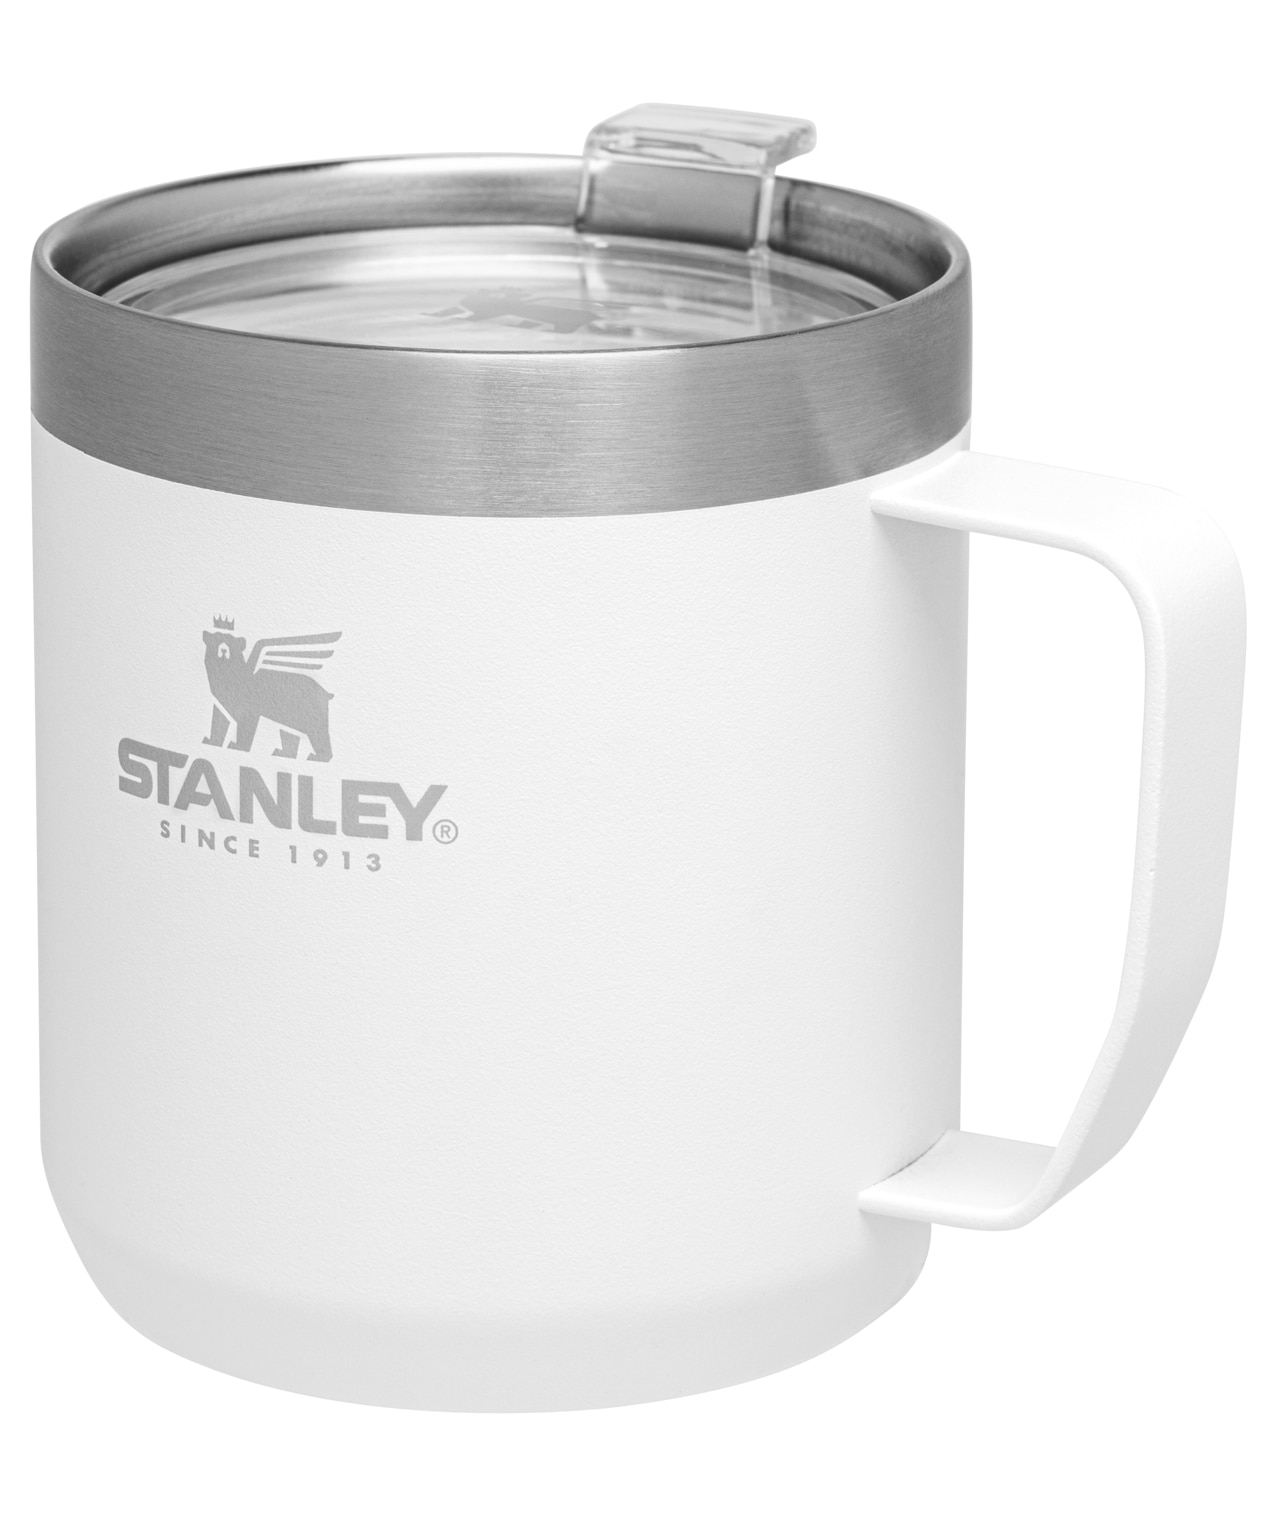 Stanley Stay-Hot Titanium Camp Mug - 12 fl. oz.